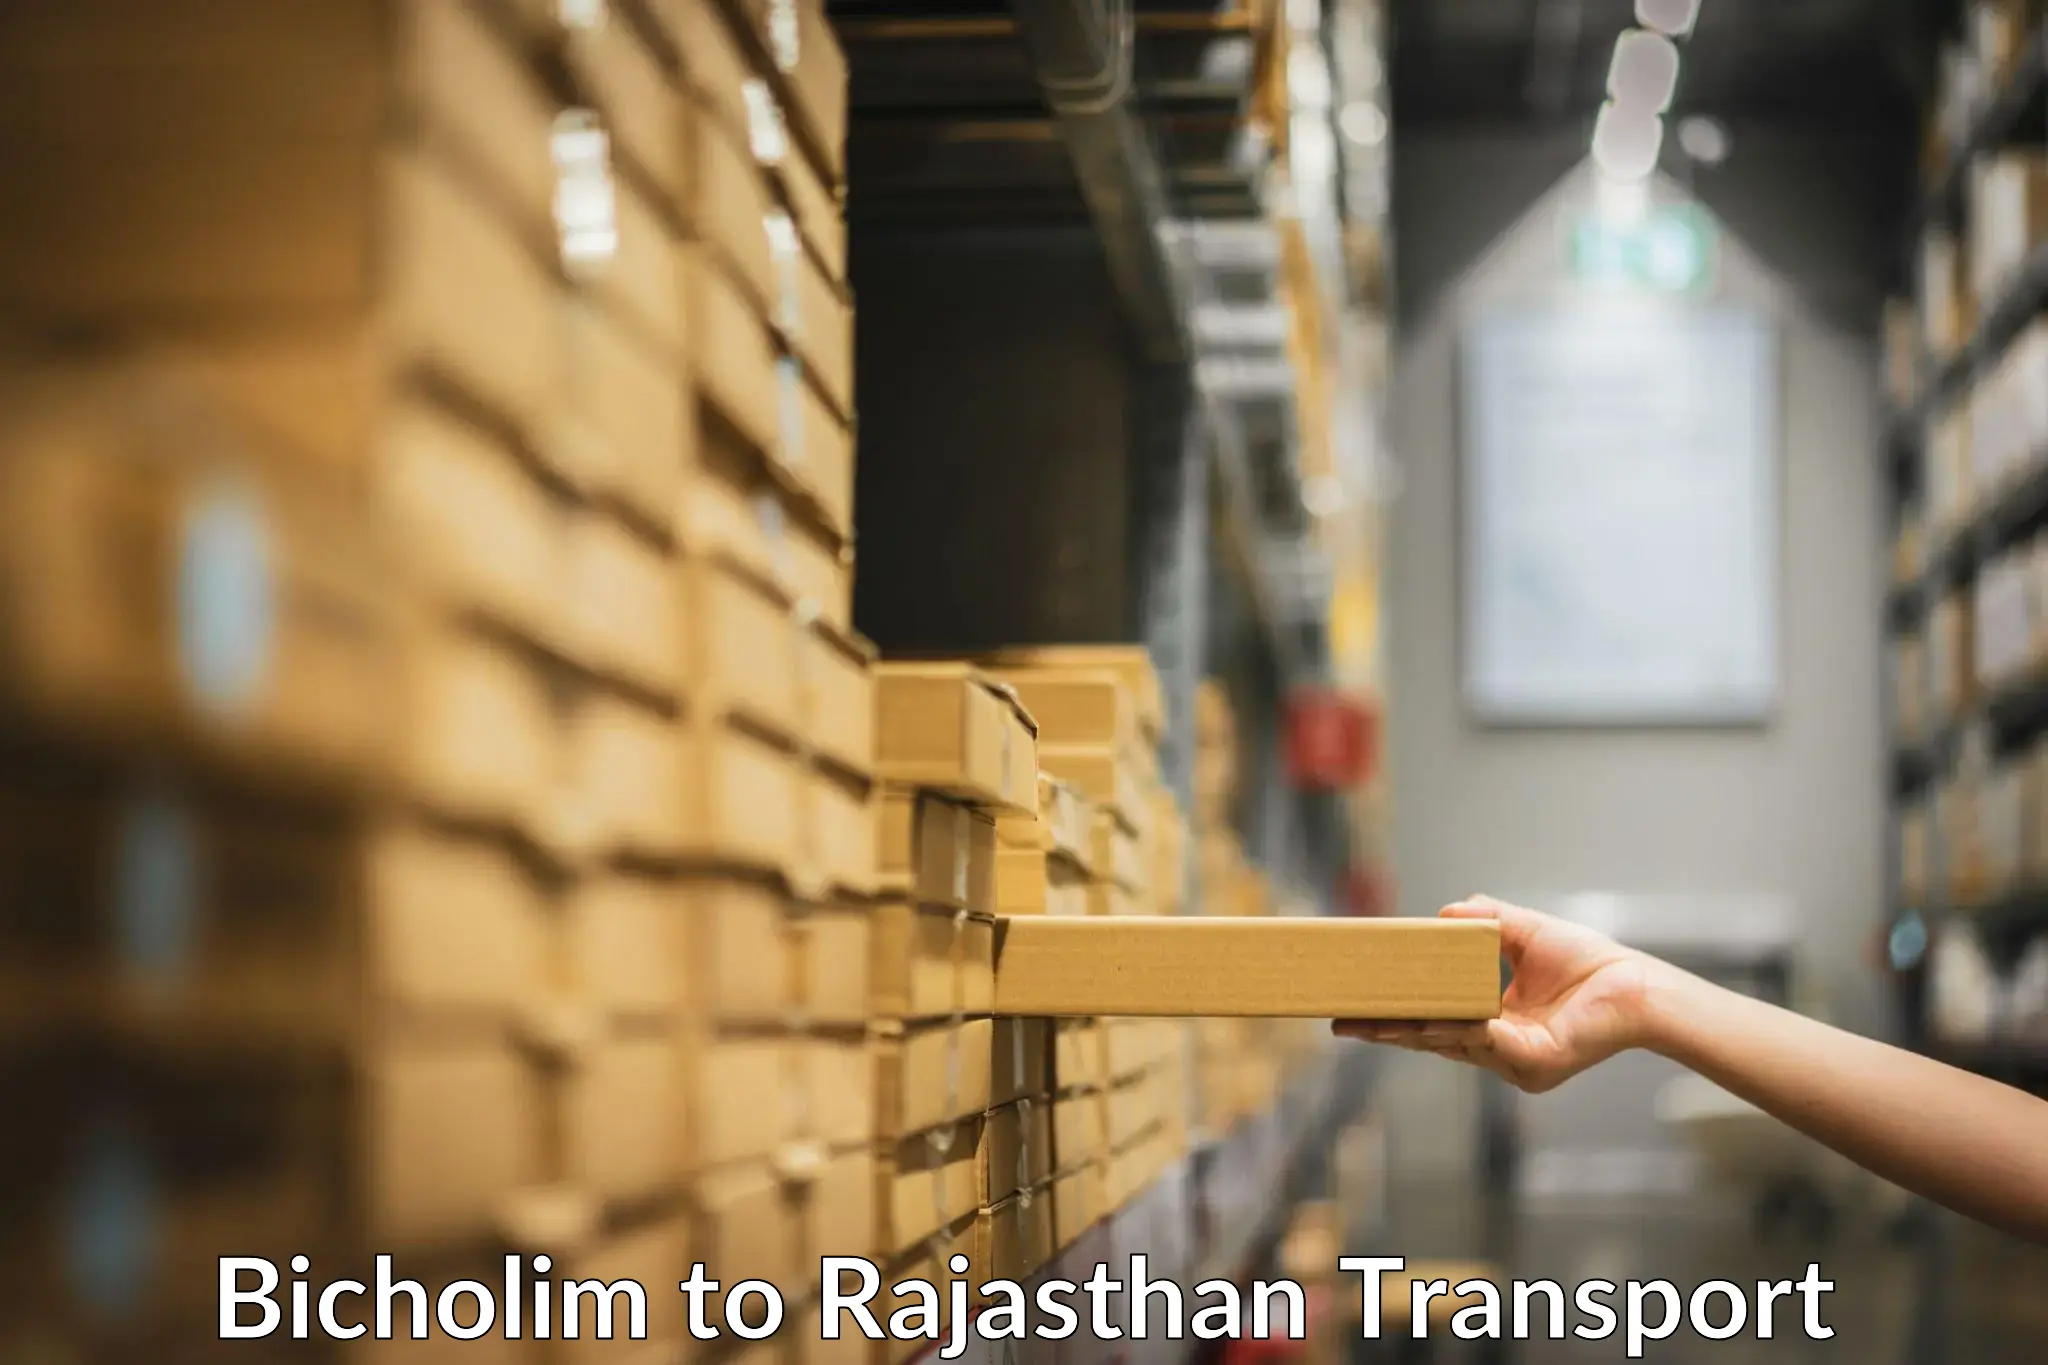 Truck transport companies in India Bicholim to Gotan